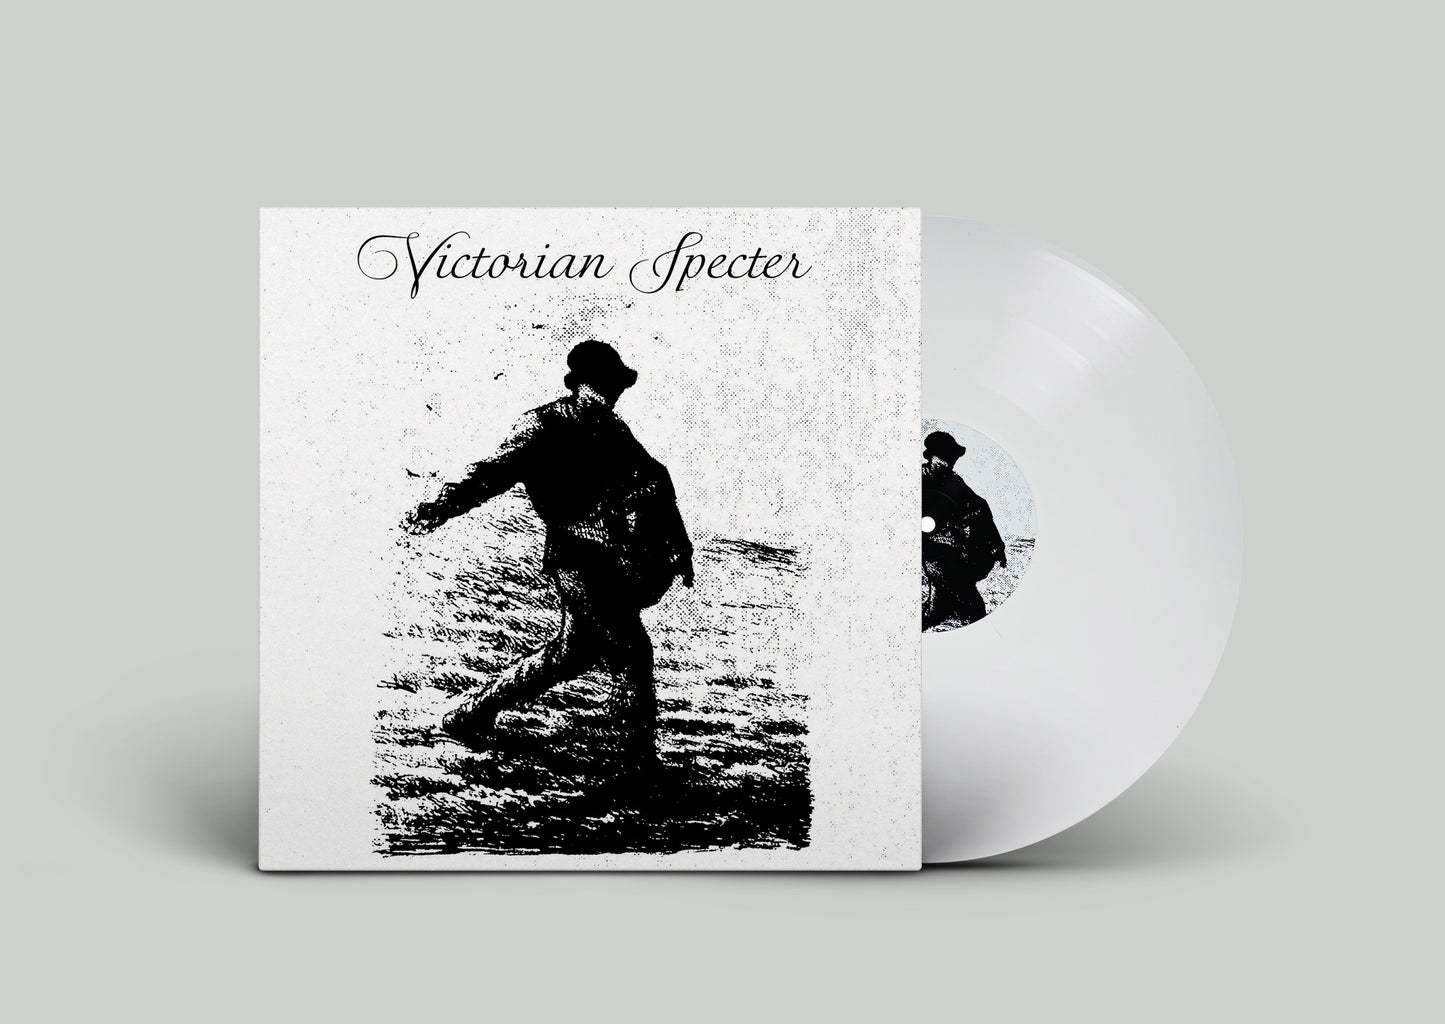 VICTORIAN SPECTER "The Sower in Open Fields" Vinyl LP (2 color options)